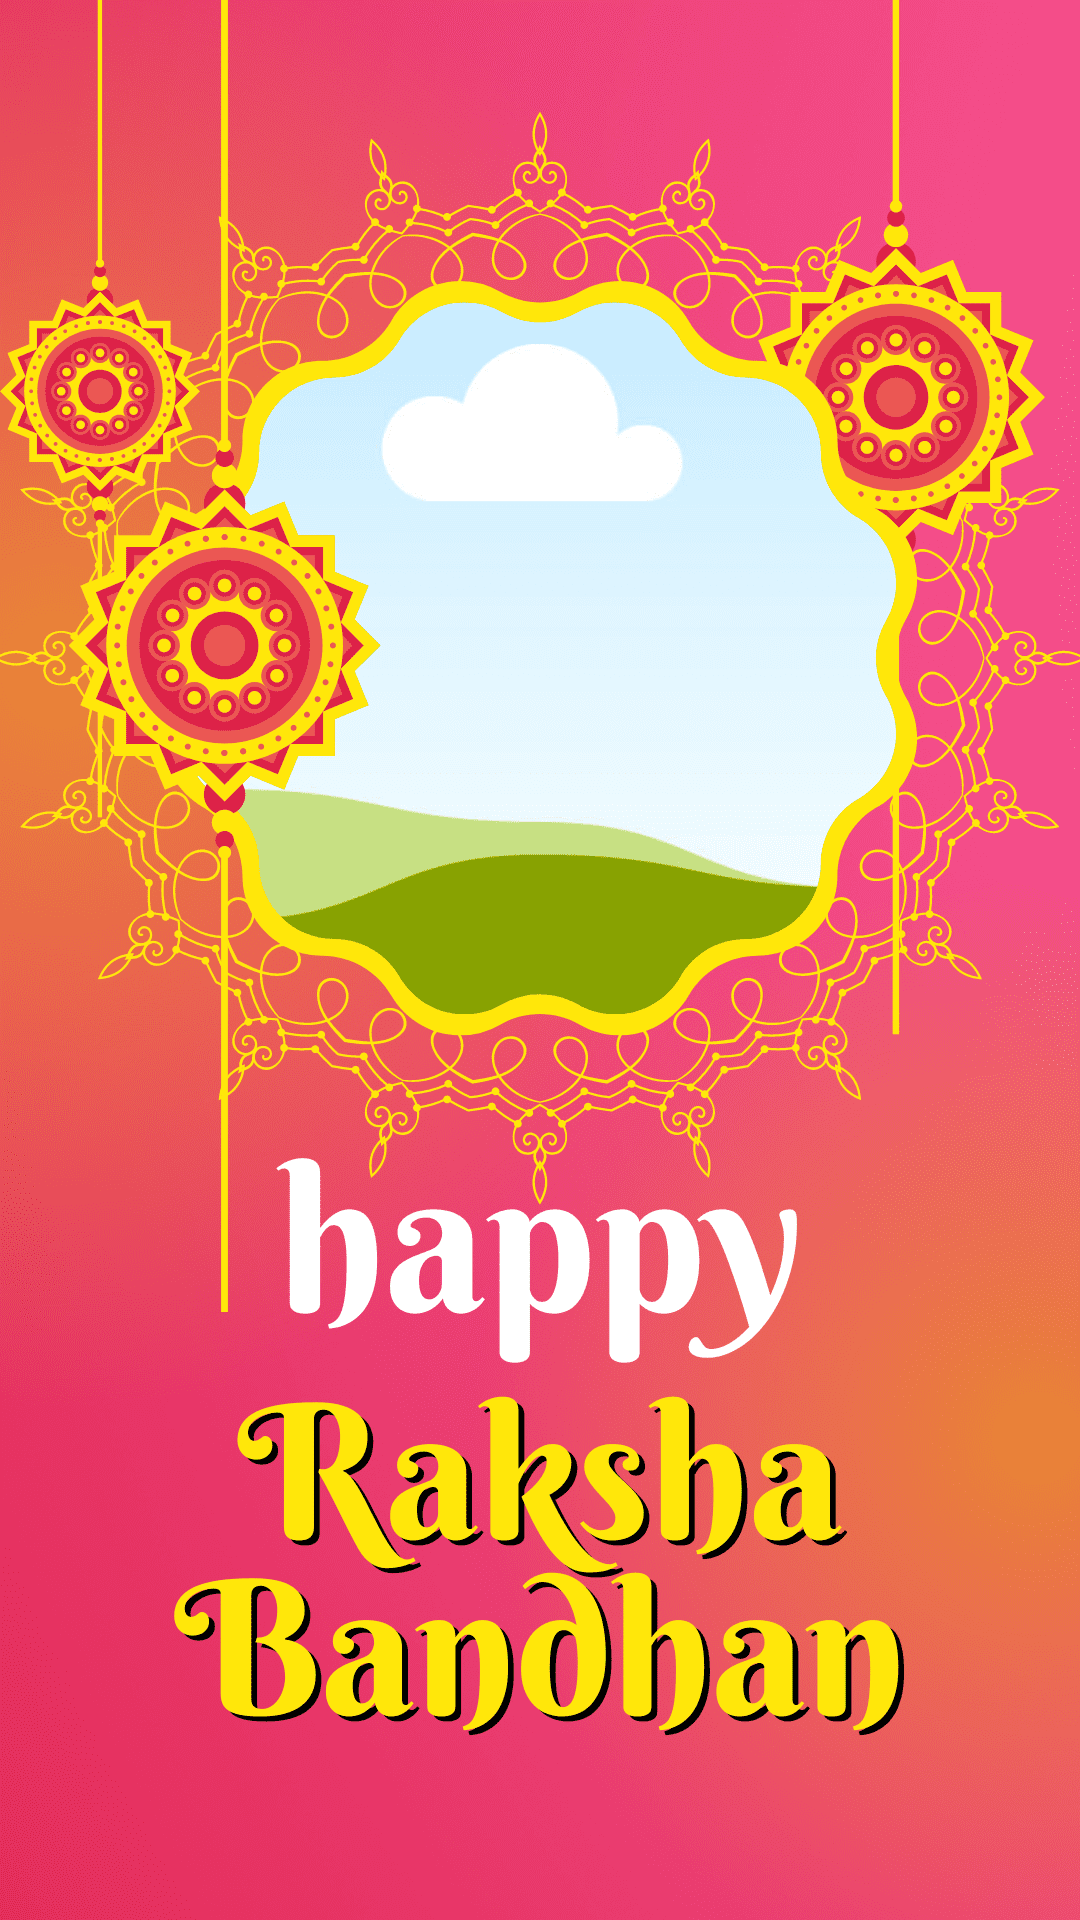 30th August, Raksha Bandhan HD Wallpaper